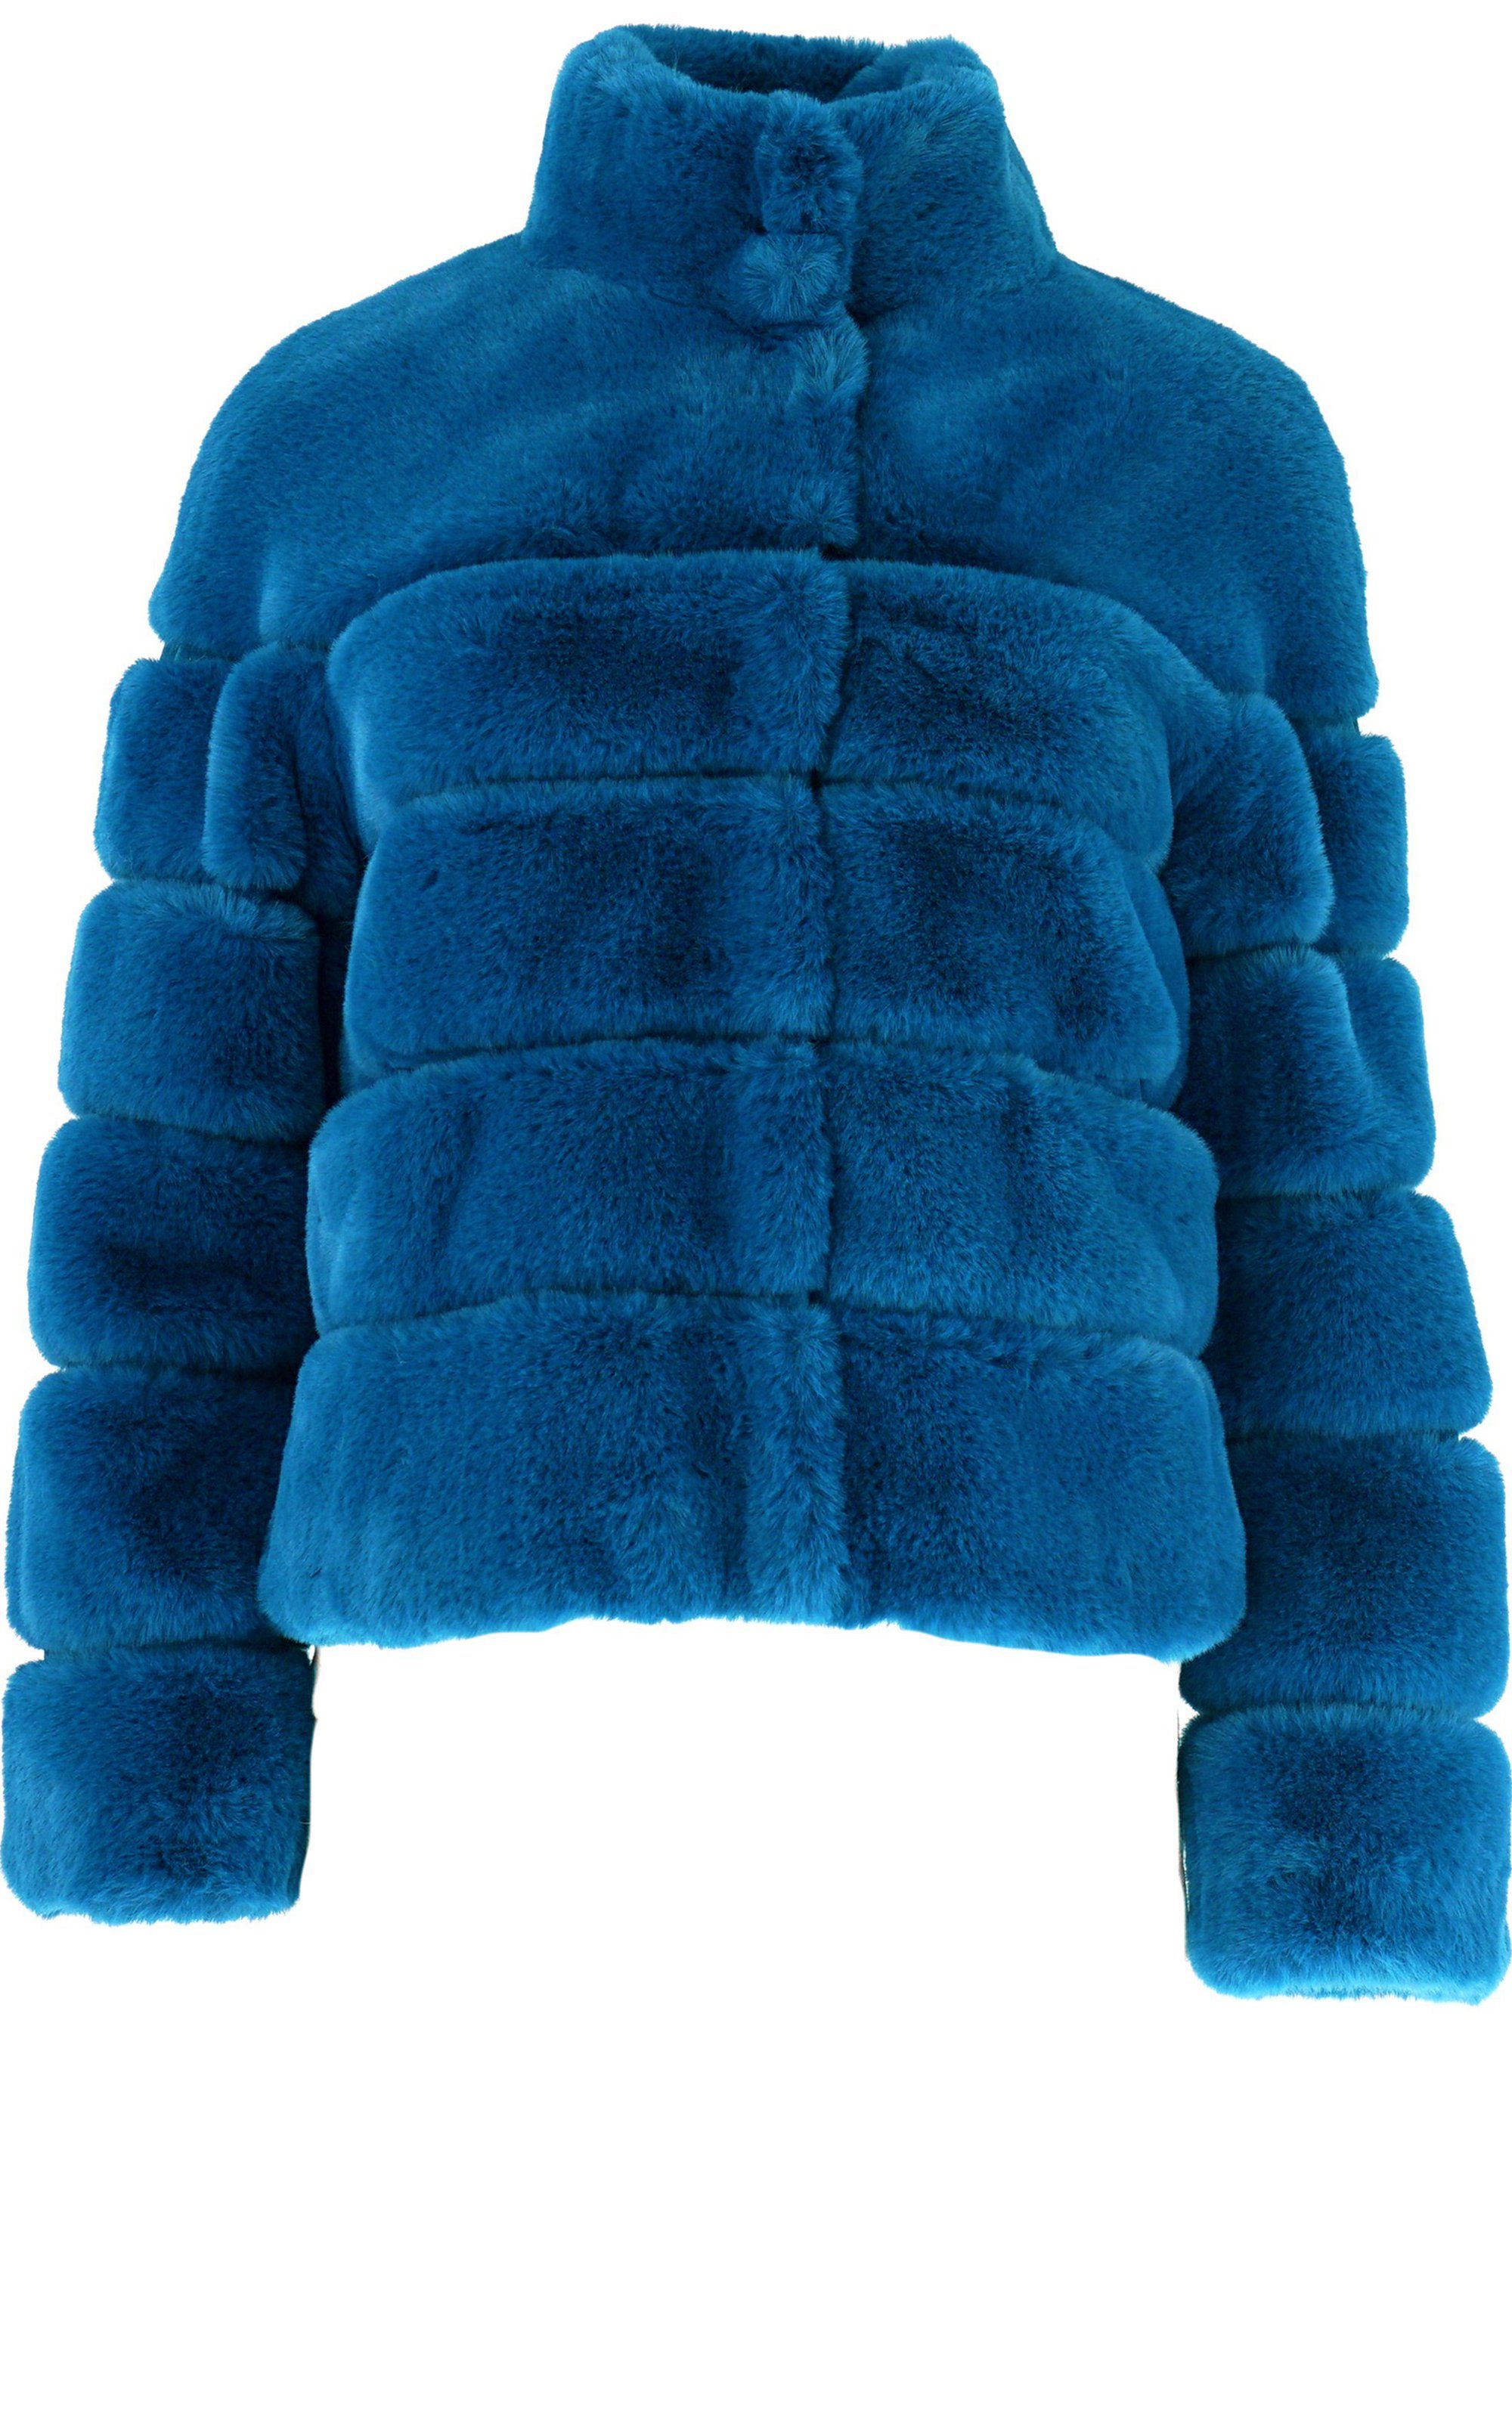 Antonio Cavosi Winterjacke hochwertige Web-Pellz Jacke in blau